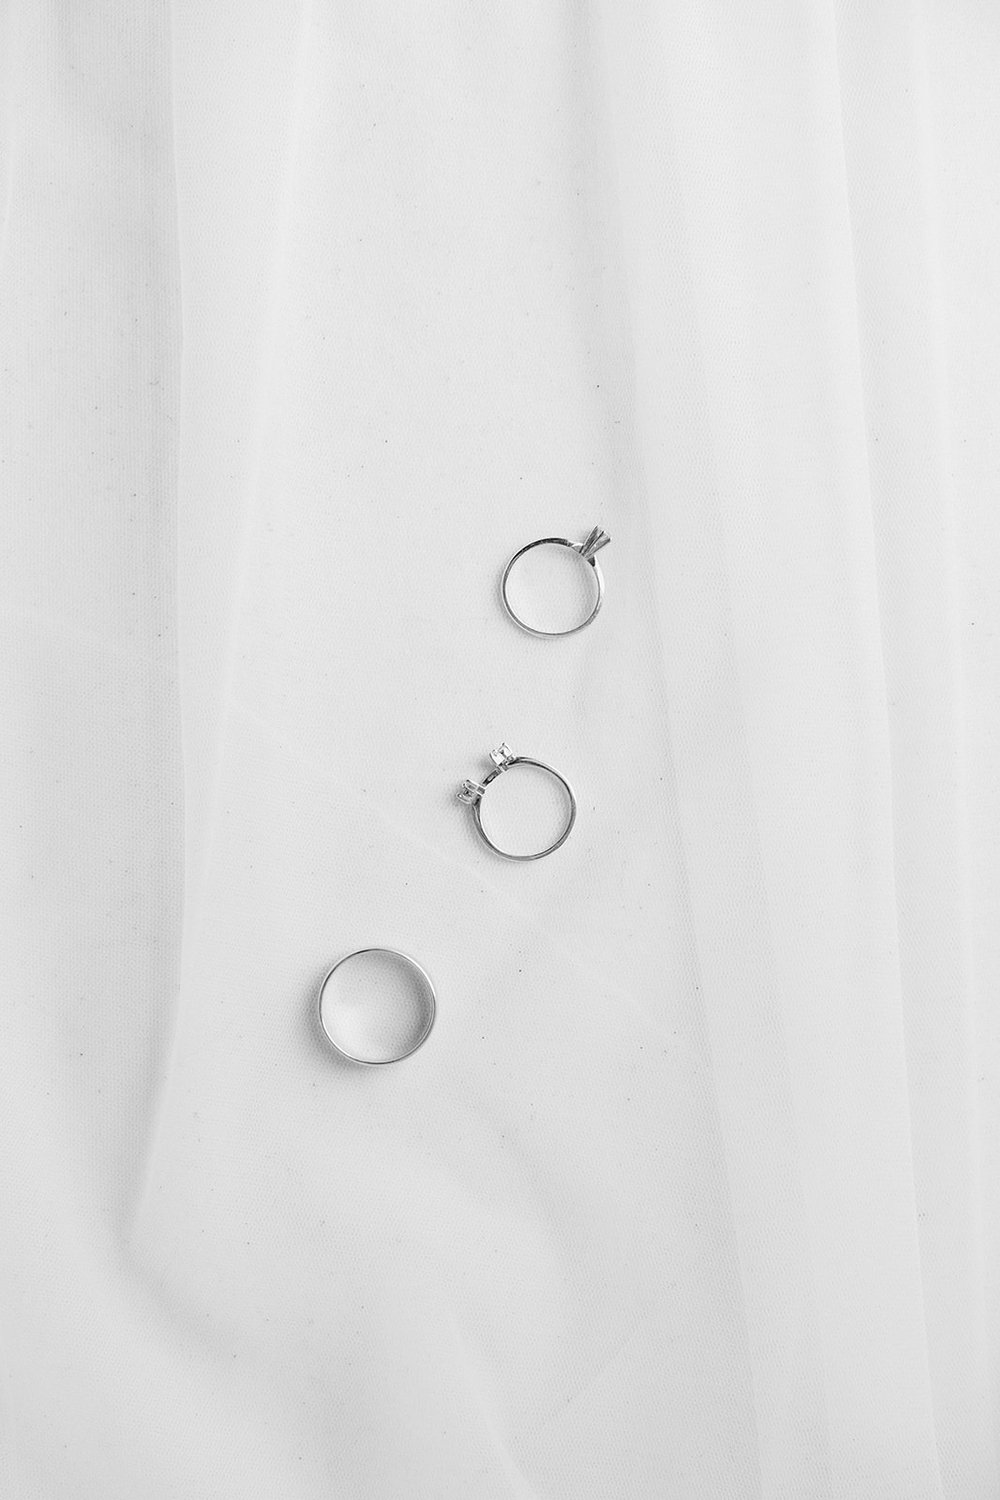  Ring details at an intimate wedding in Fredericksburg, Virginia. 